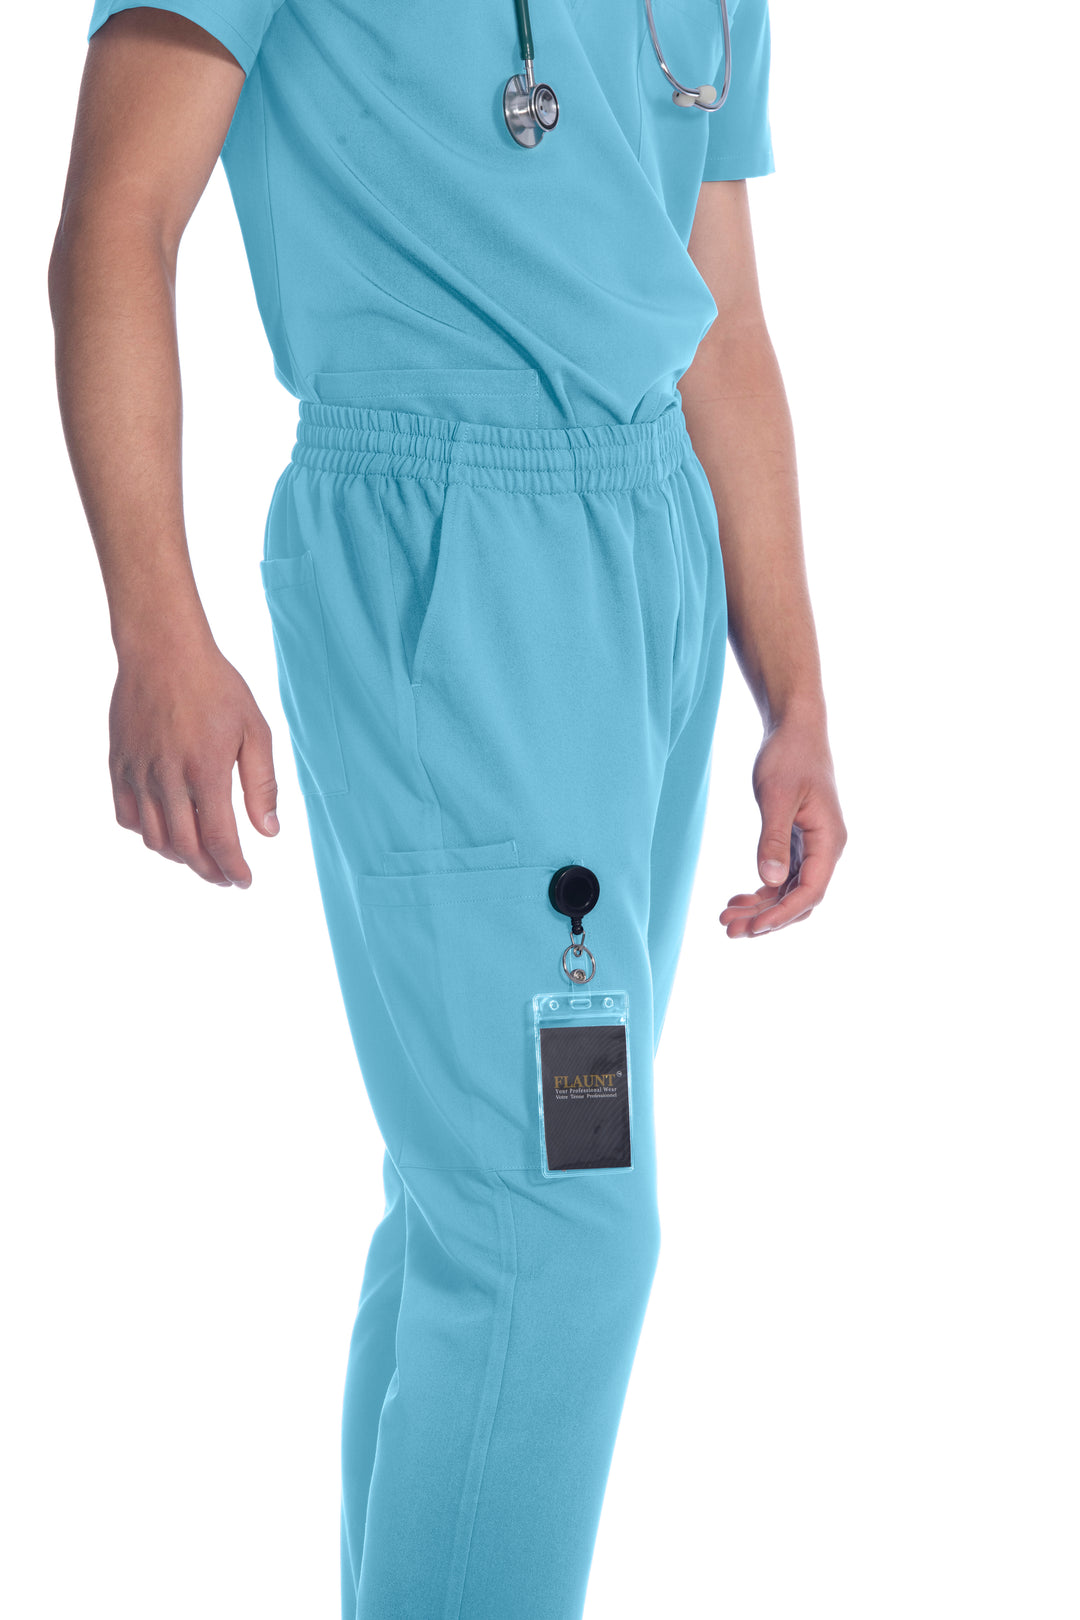 Flaunt Unisex Pant Style 7201: Ultimate Comfort & Functionality - Medical Wear